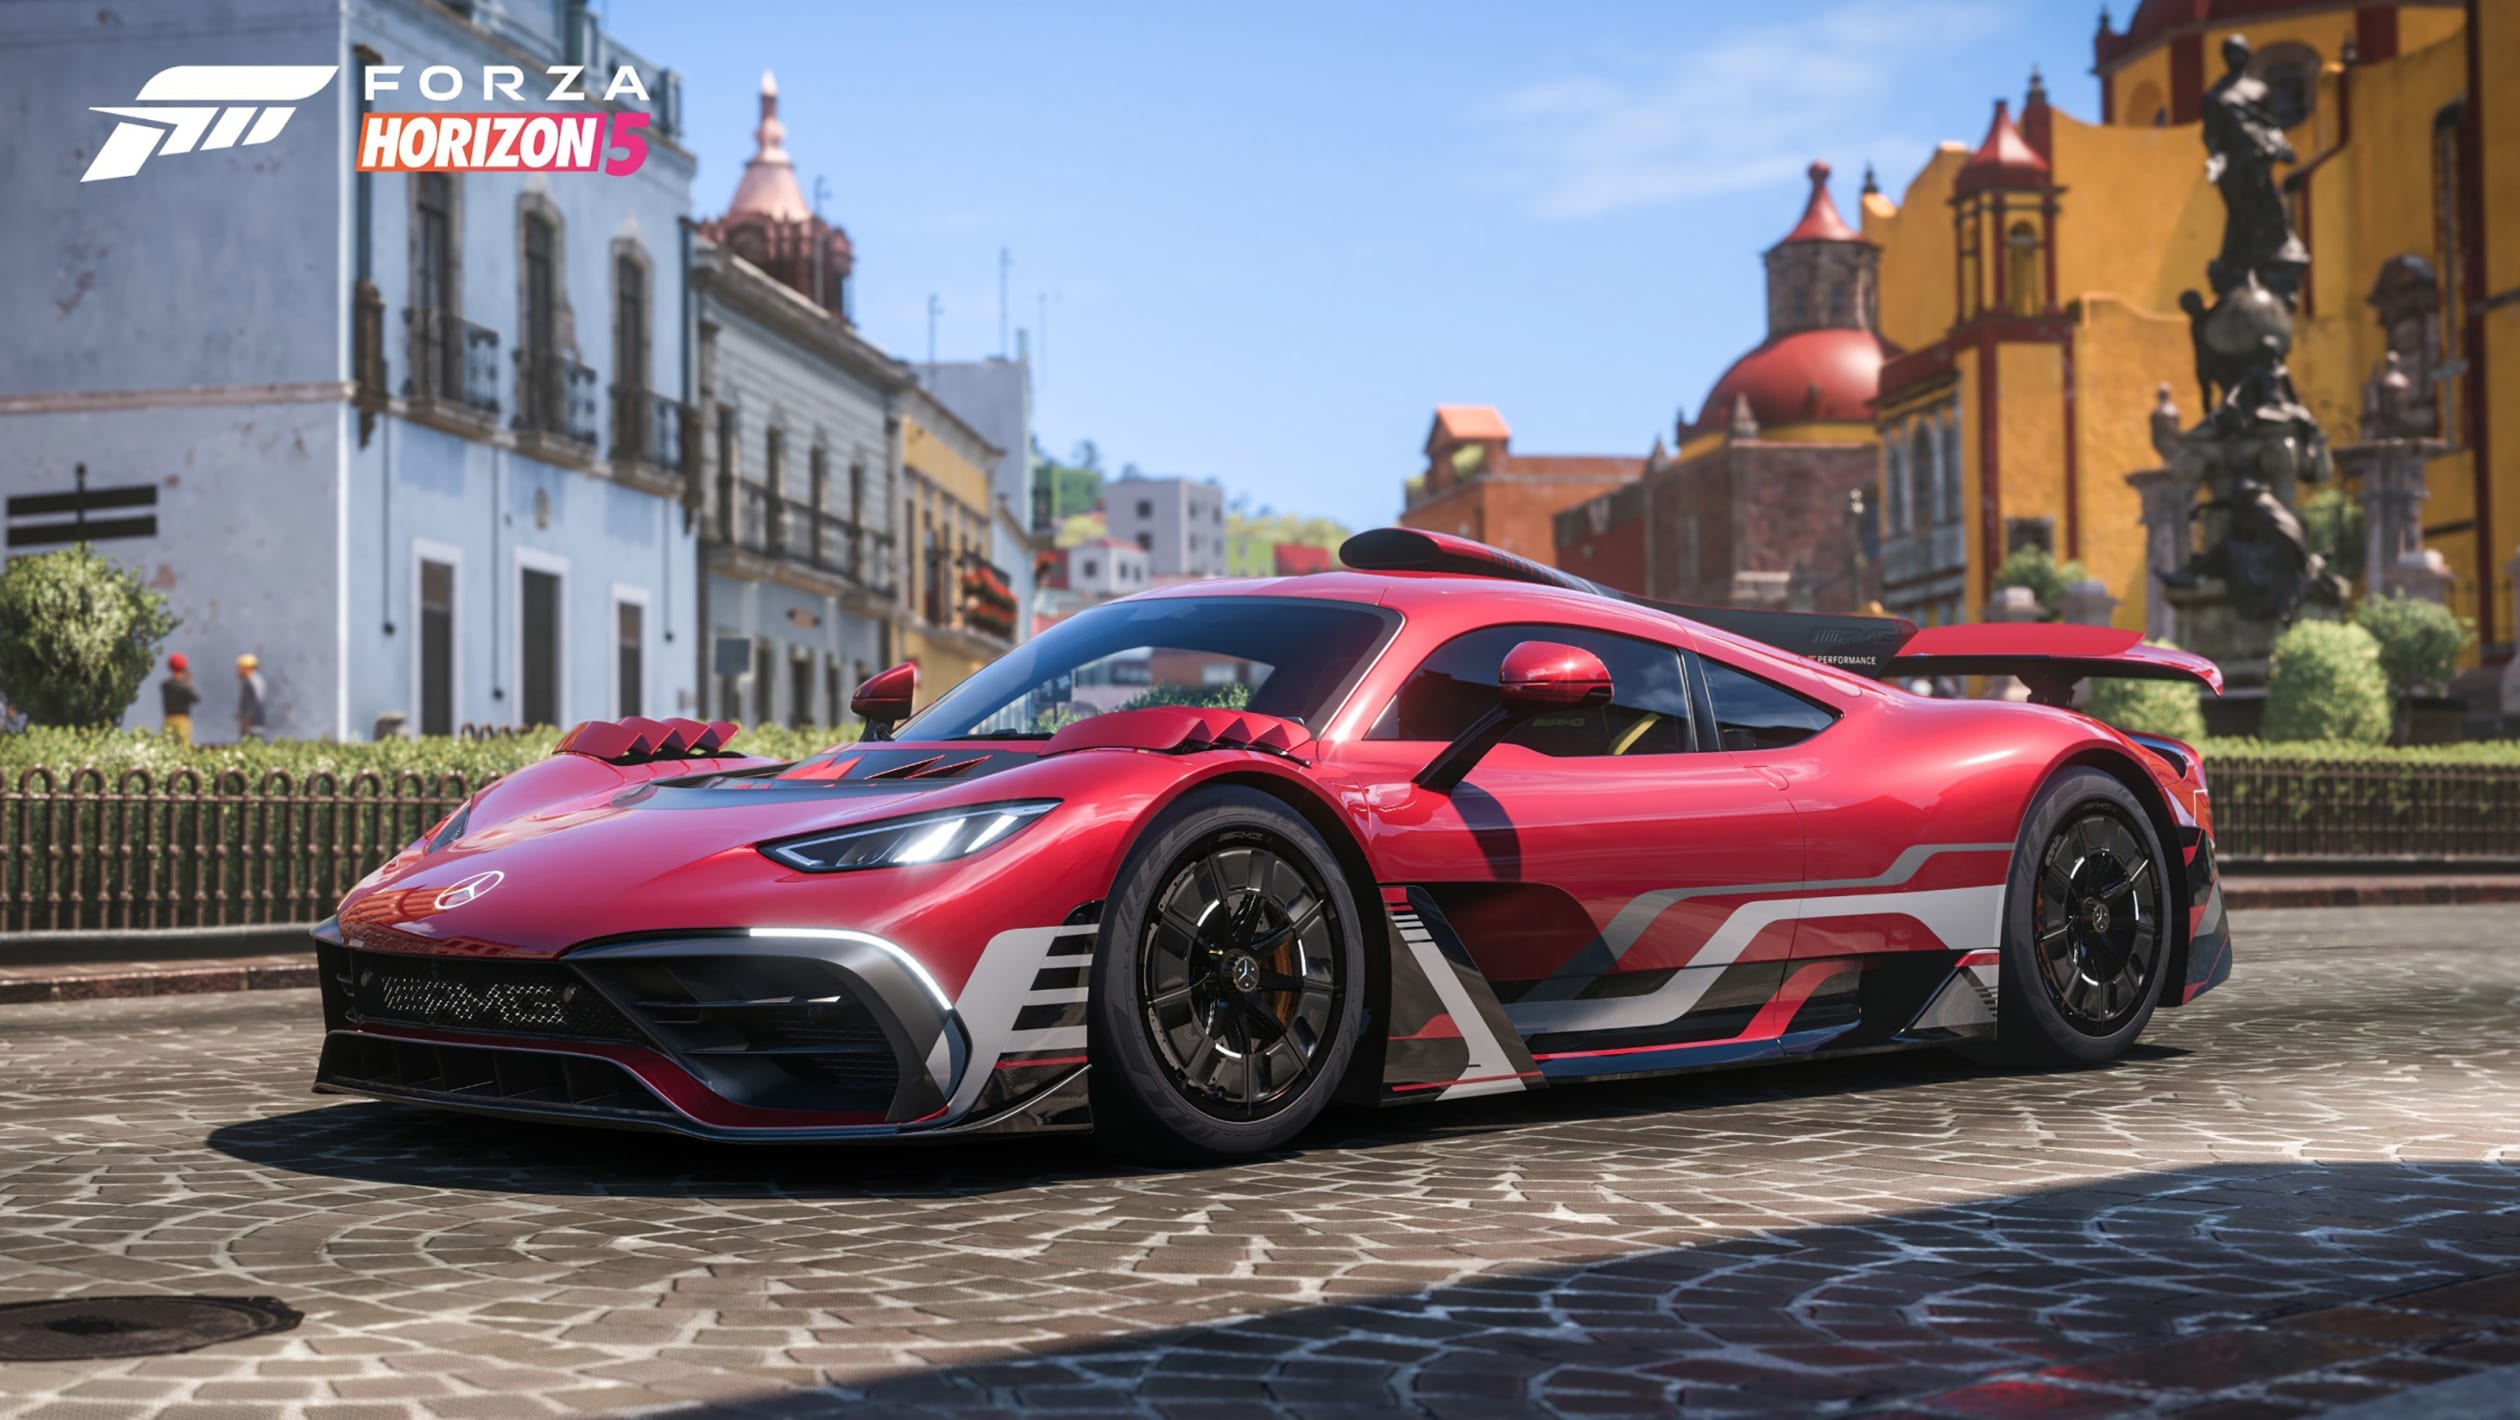 Forza Horizon 5 - Premium Edition для XBOX